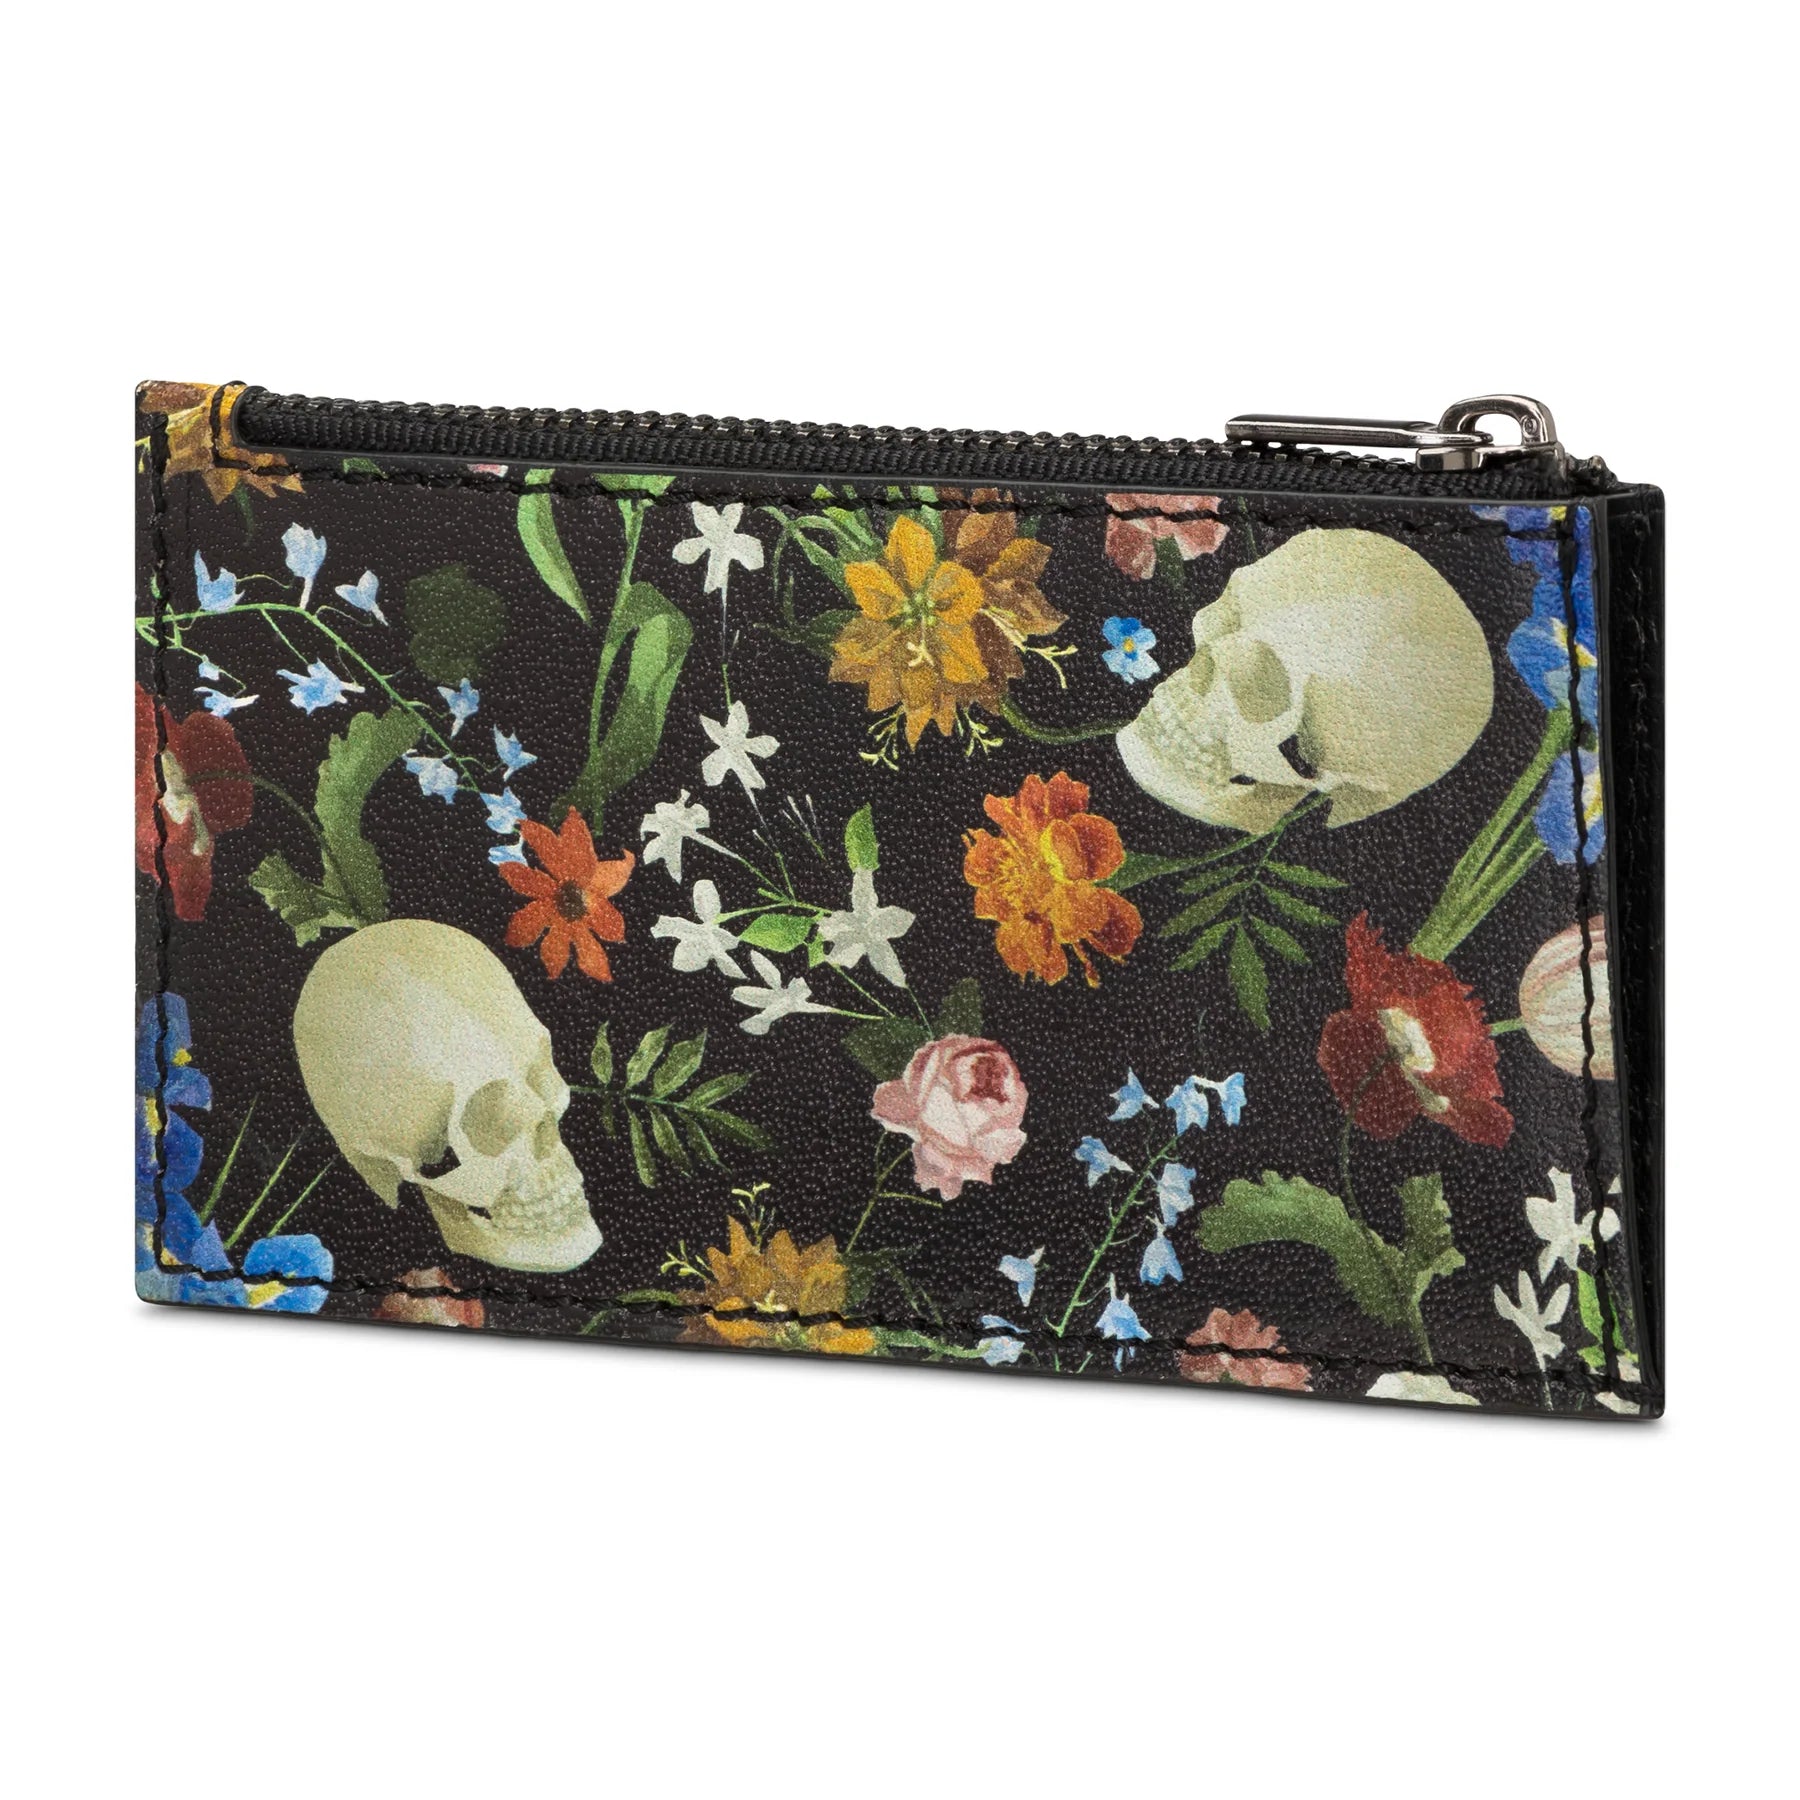 Skull & Bone Black leather zip wallet with skulls and flowers - Haut Underwear